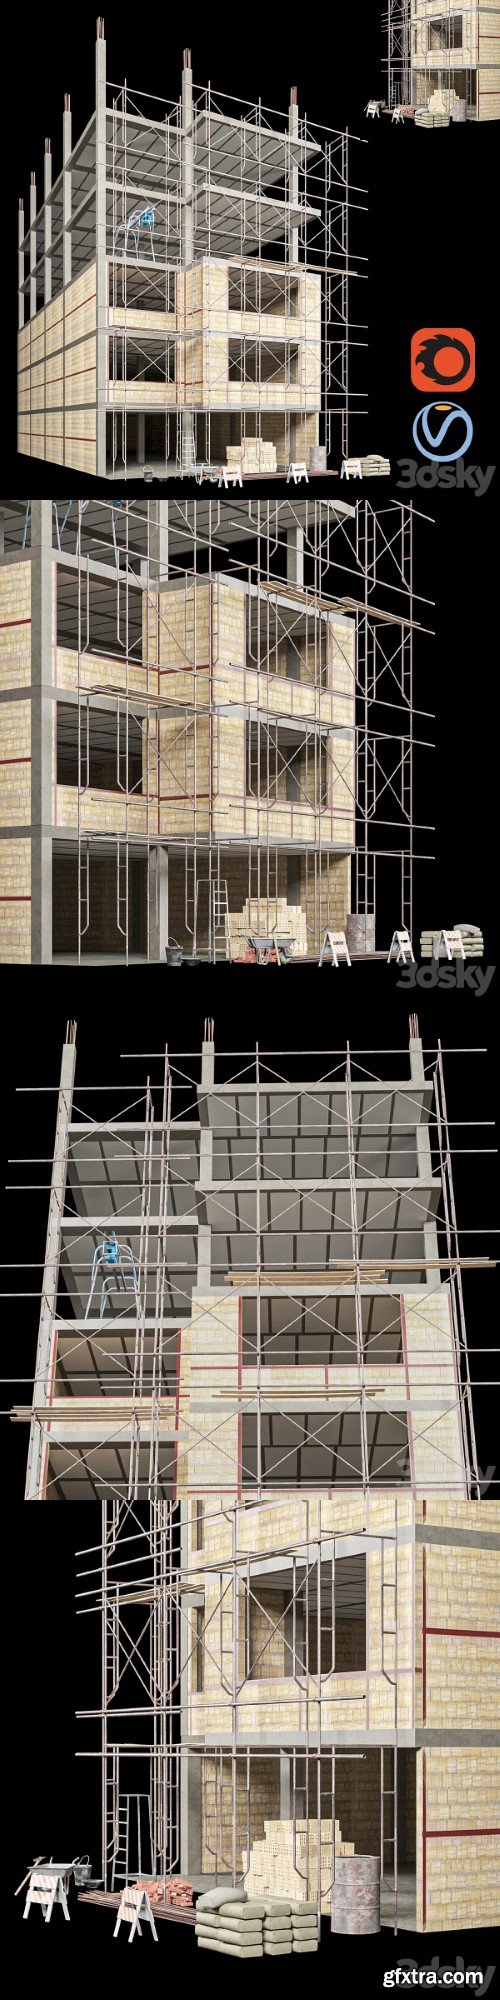 Pro 3DSky - Modular Construction Site 03